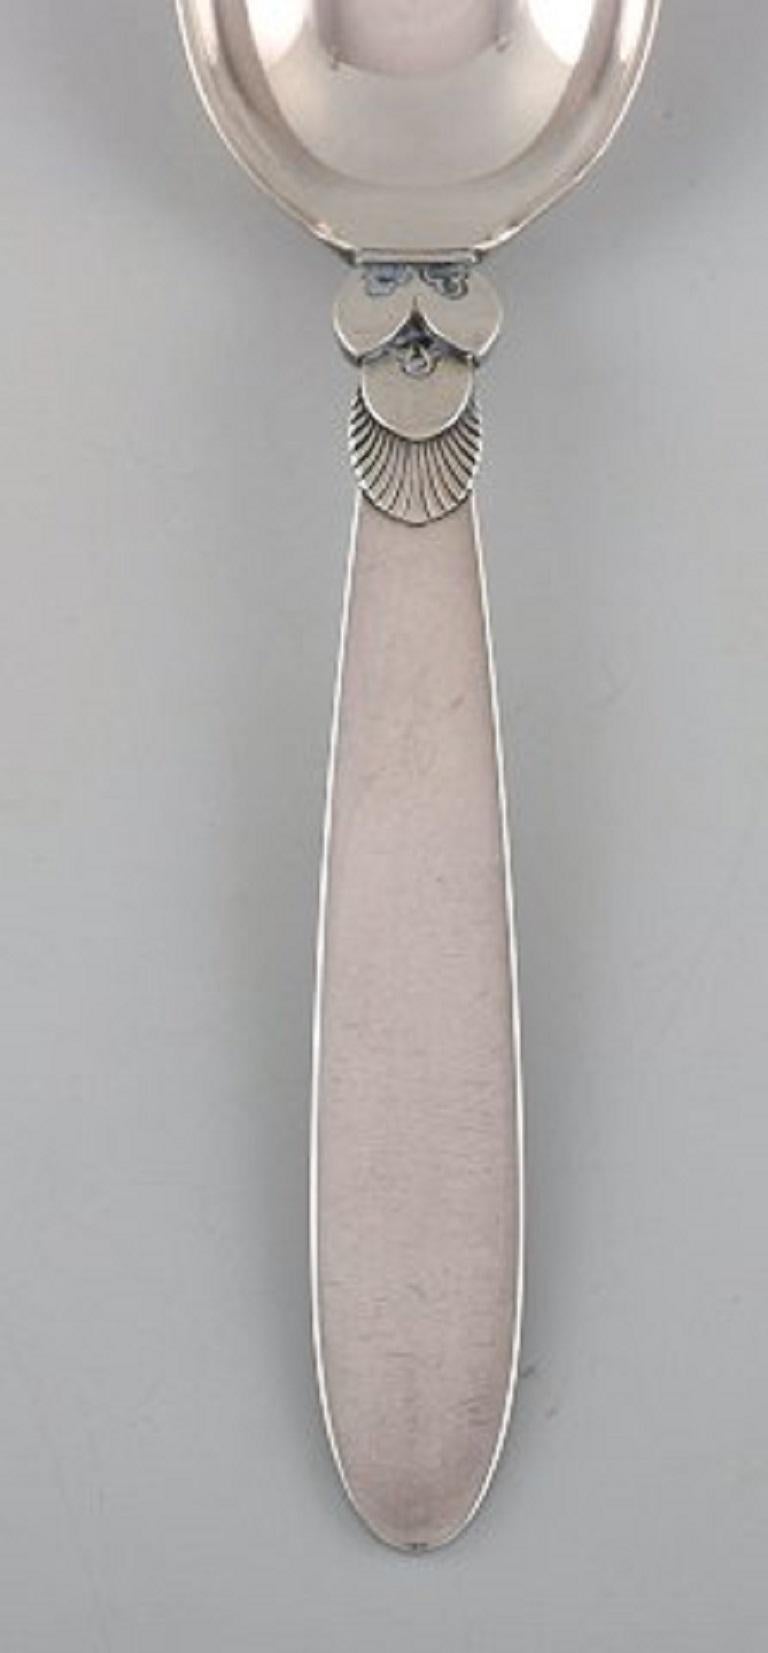 Georg Jensen cactus dessert spoon in sterling silver. 12 pieces in stock.
Designer: Gundorph Albertus.
Measures: 17 cm.
Stamped.
In very good condition.